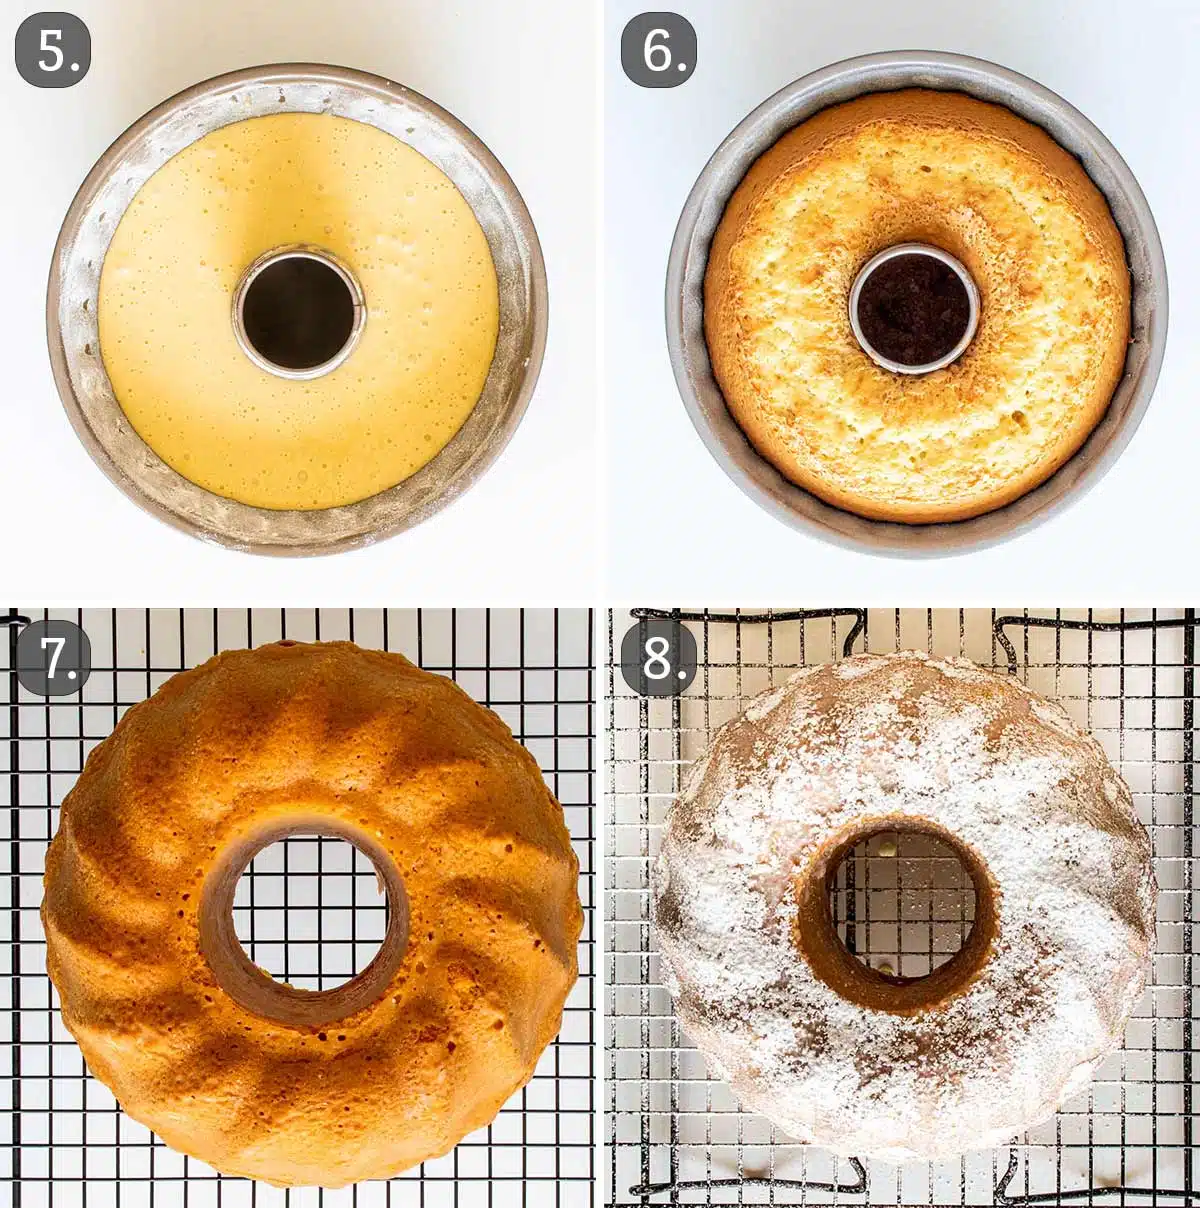 process shots showing how to finish making vanilla bundt cake.